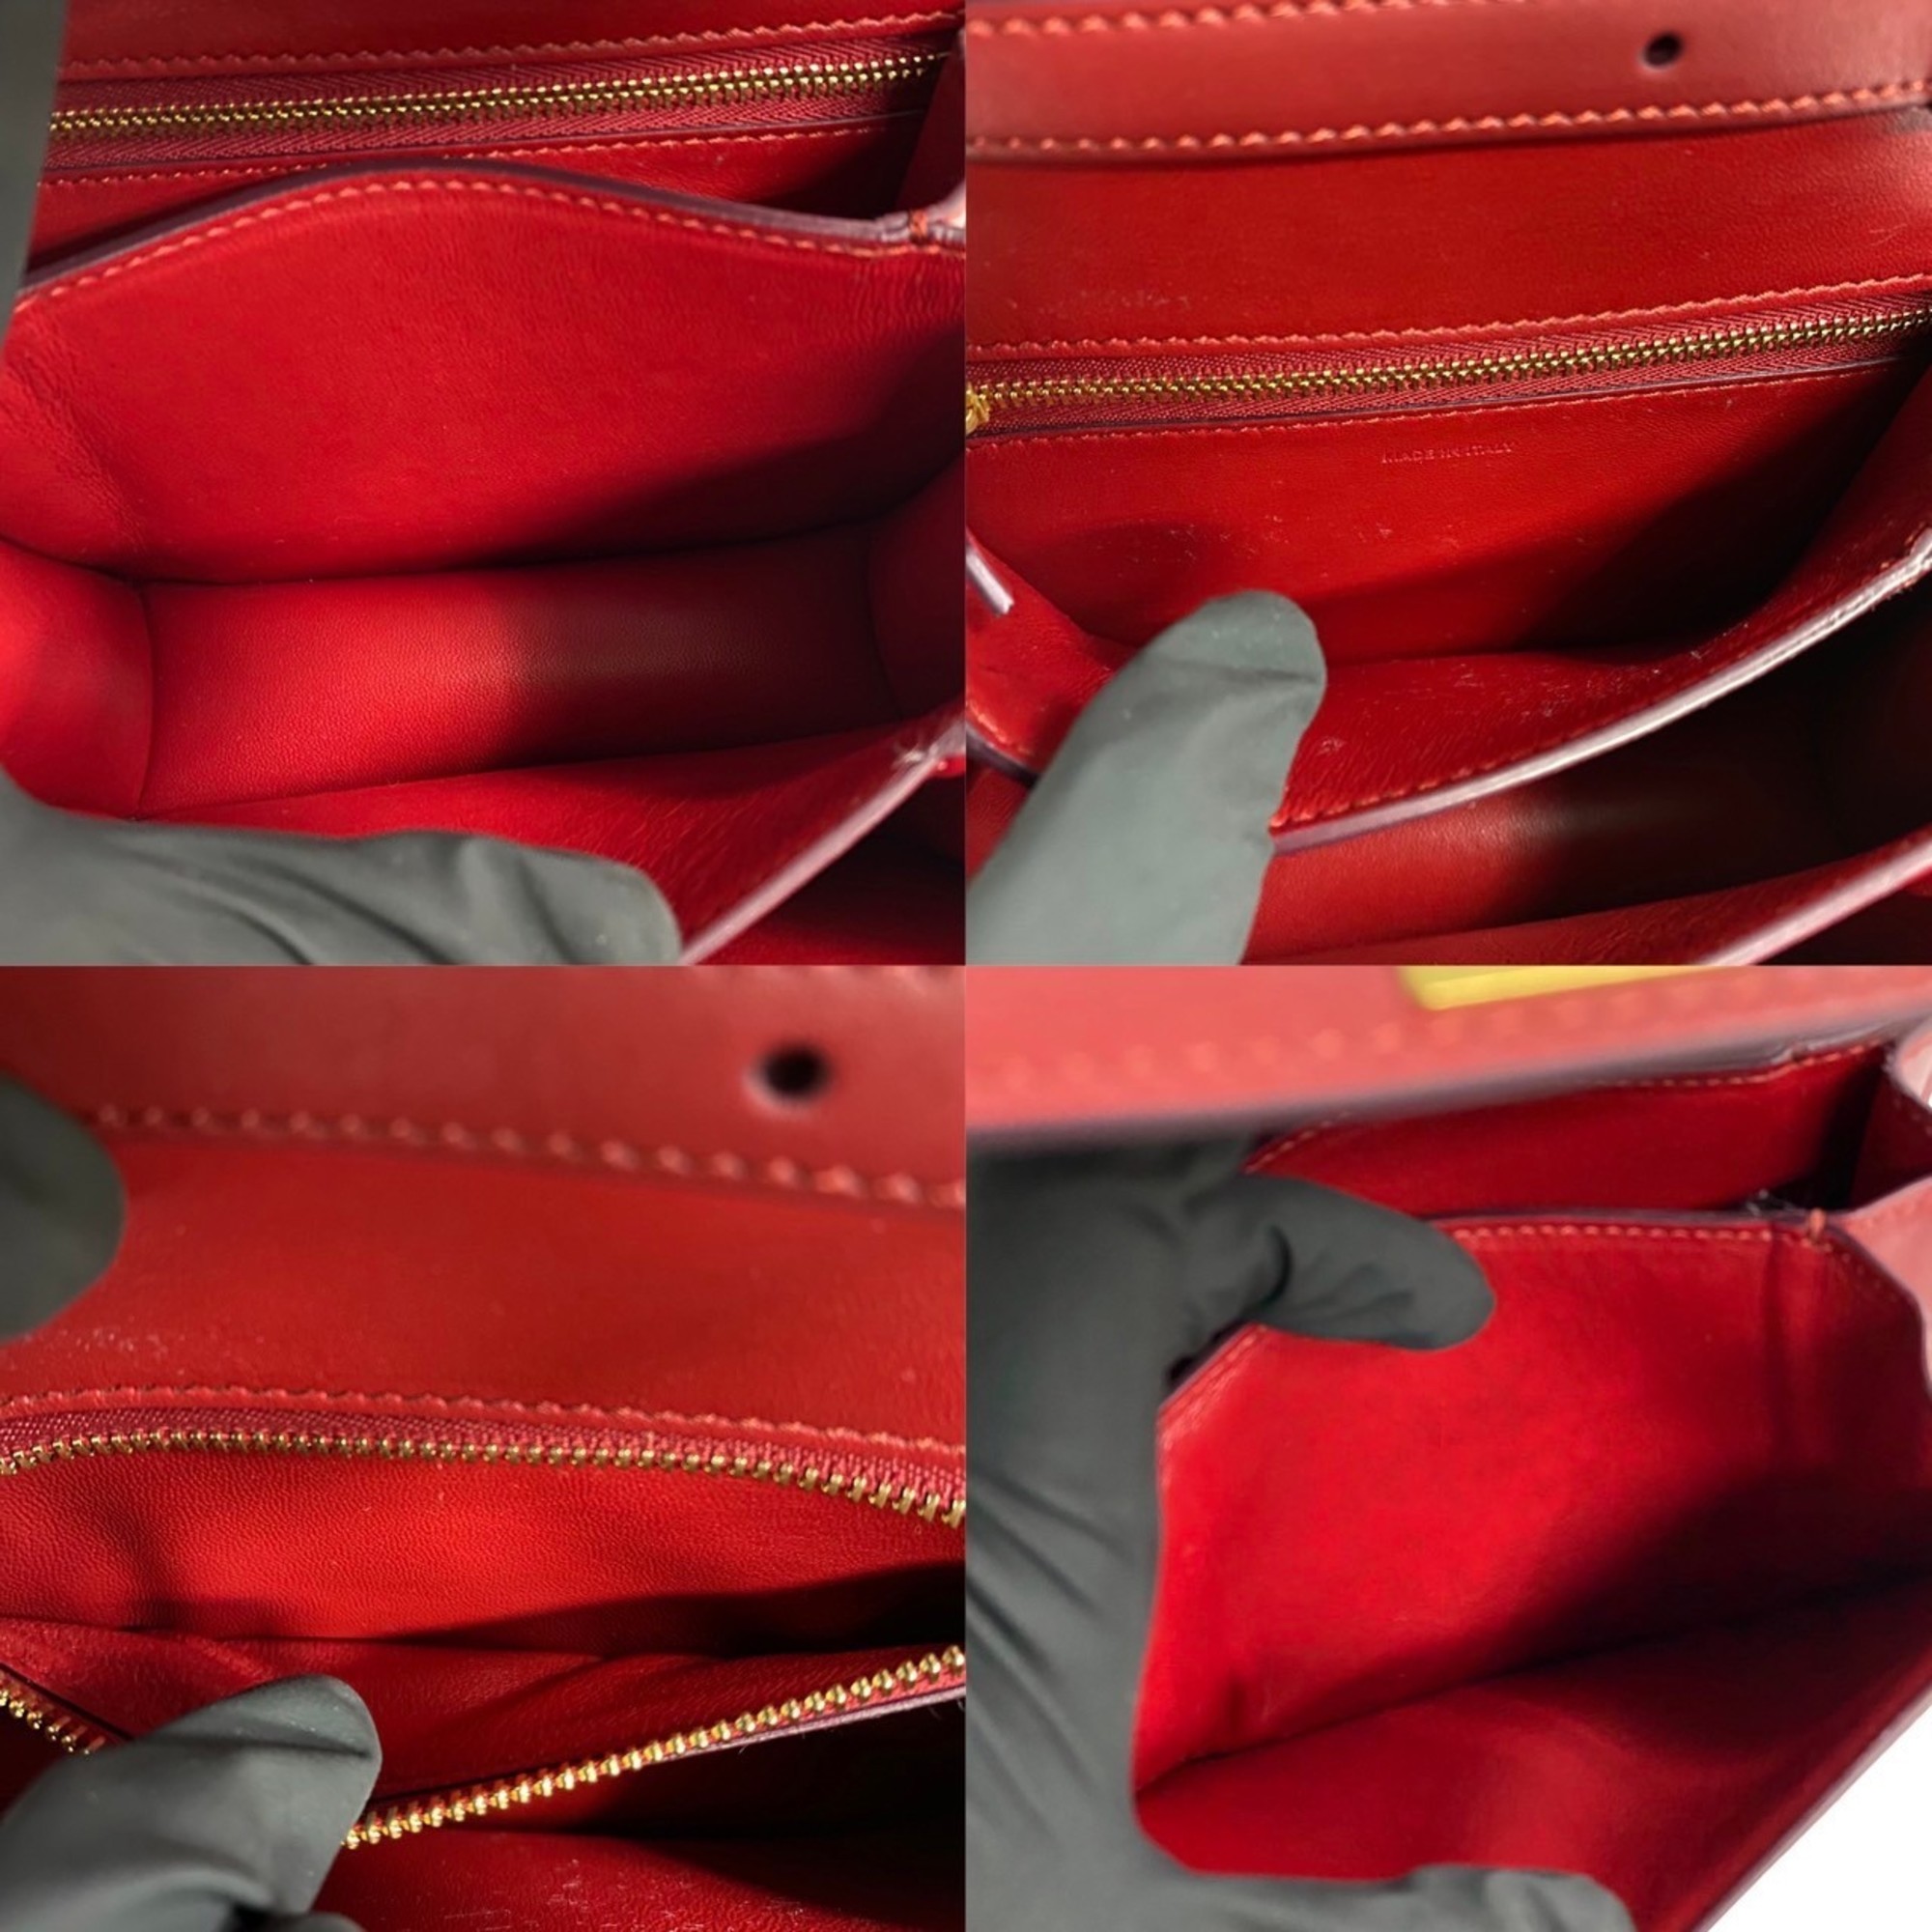 CELINE Classic Box Small Leather Shoulder Bag Pochette Red 43898